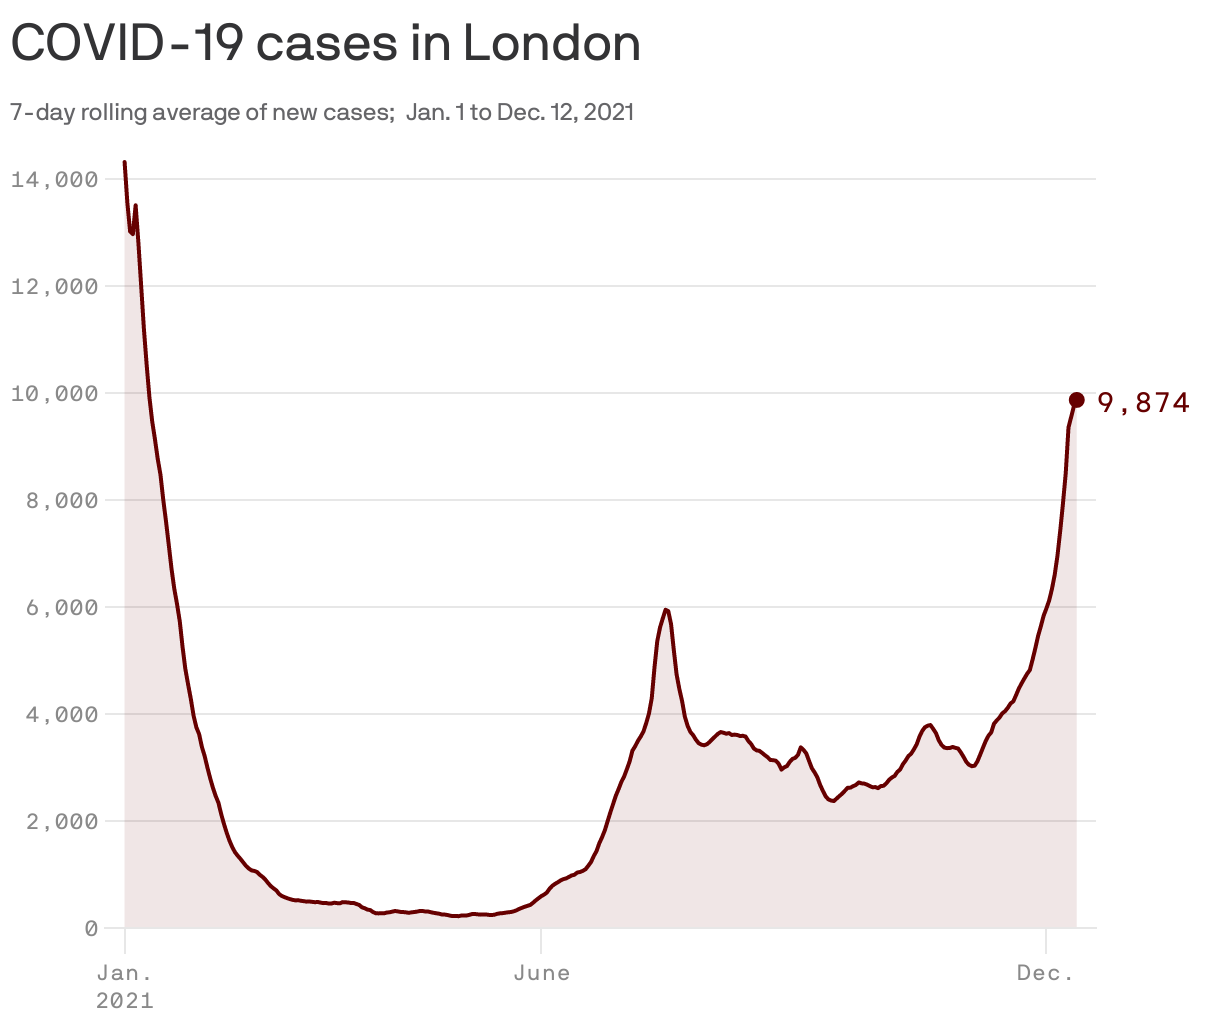 COVID-19 cases in London